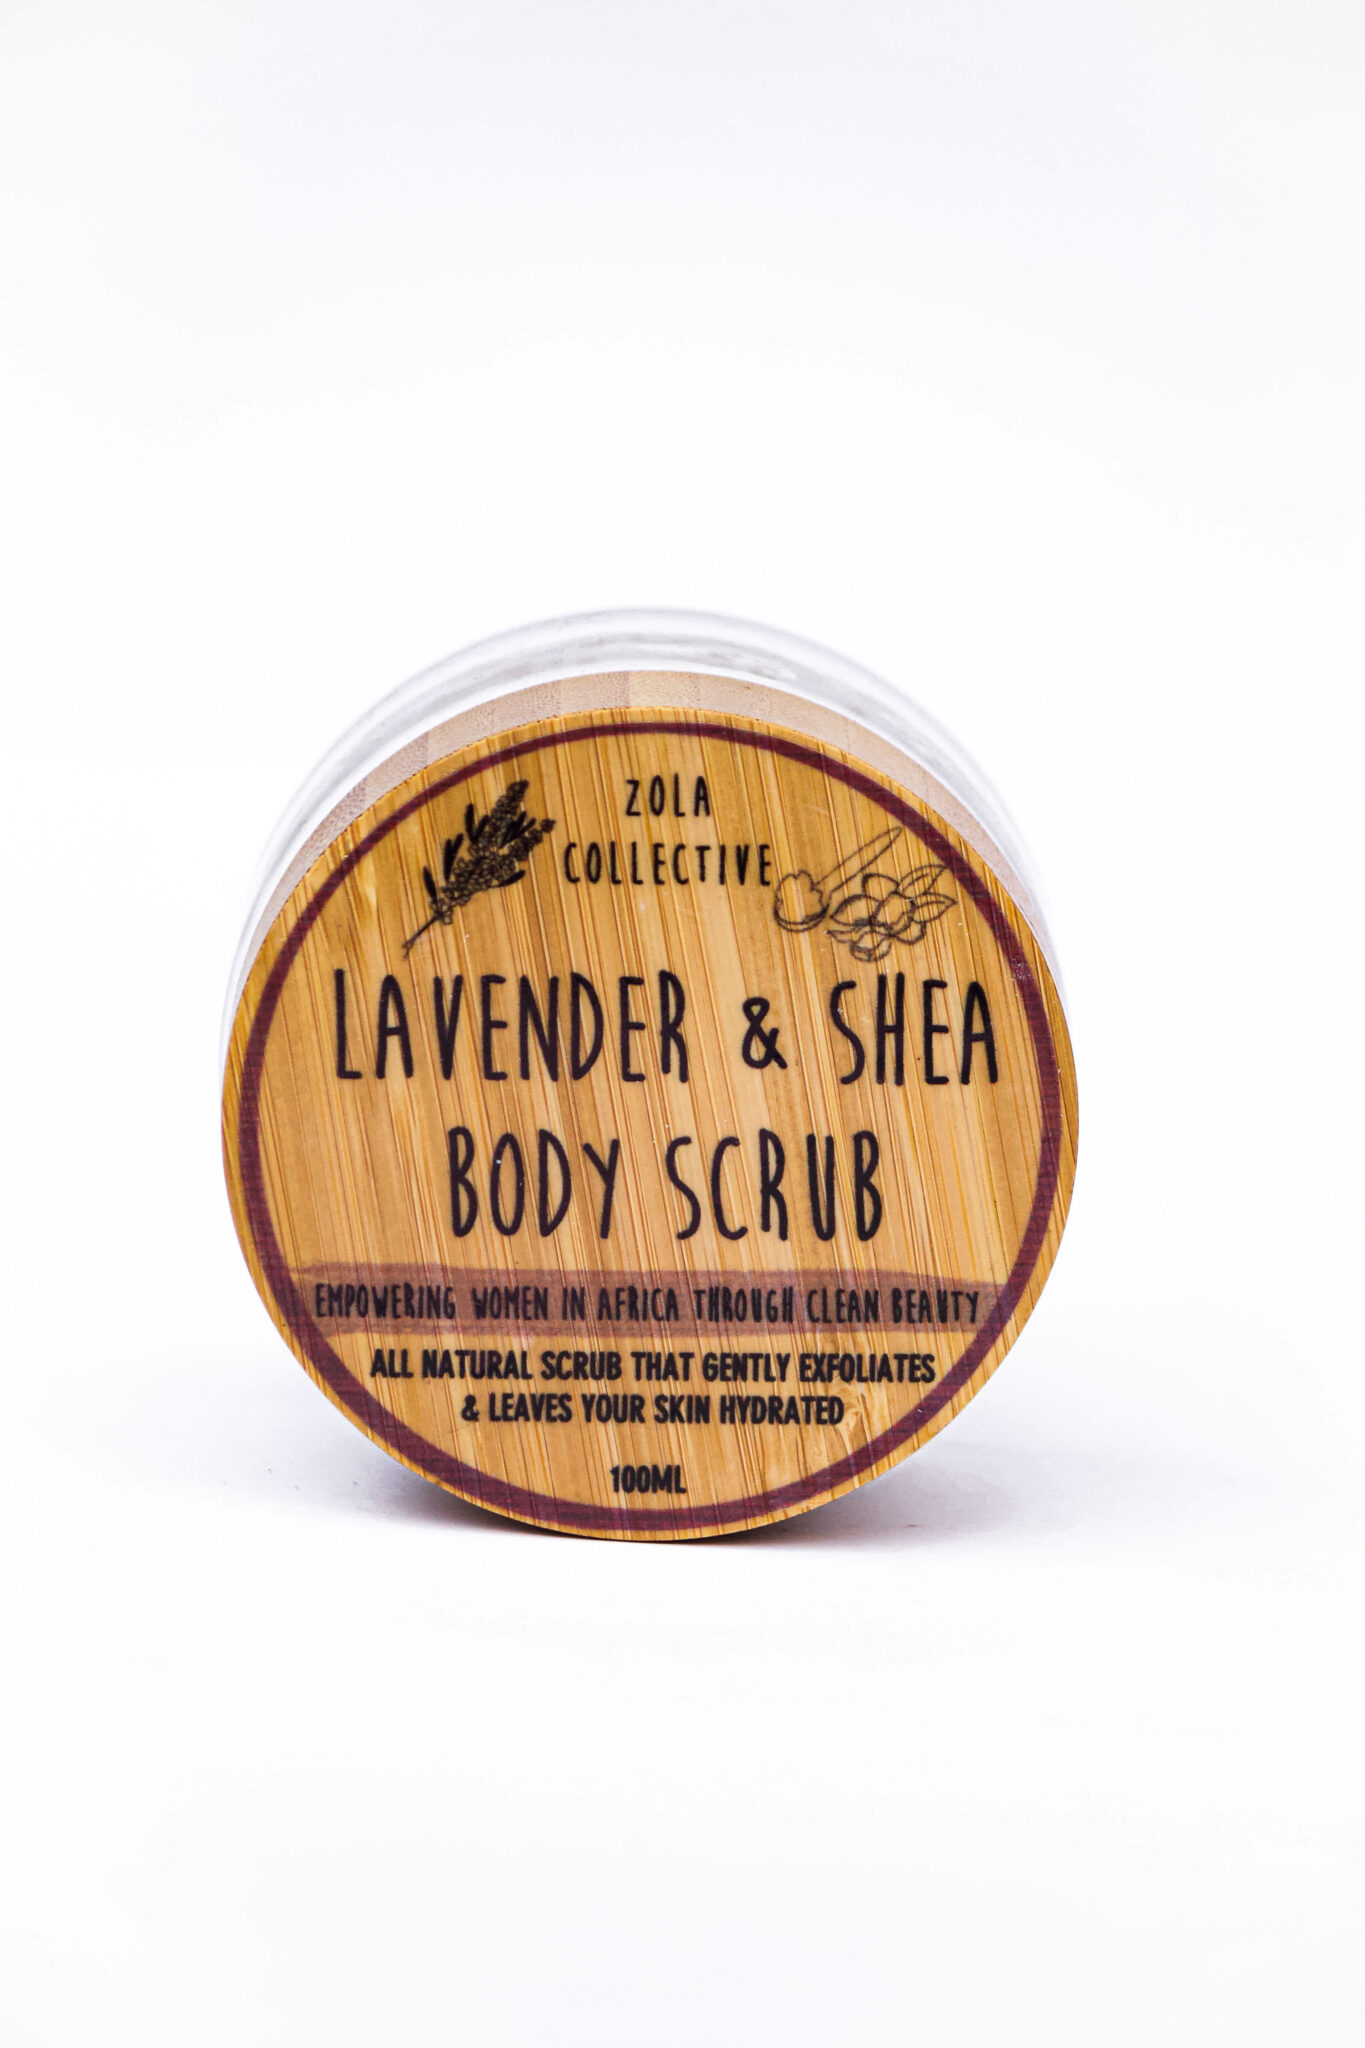 A jar of lavender and Shea ExfoliatingScrub